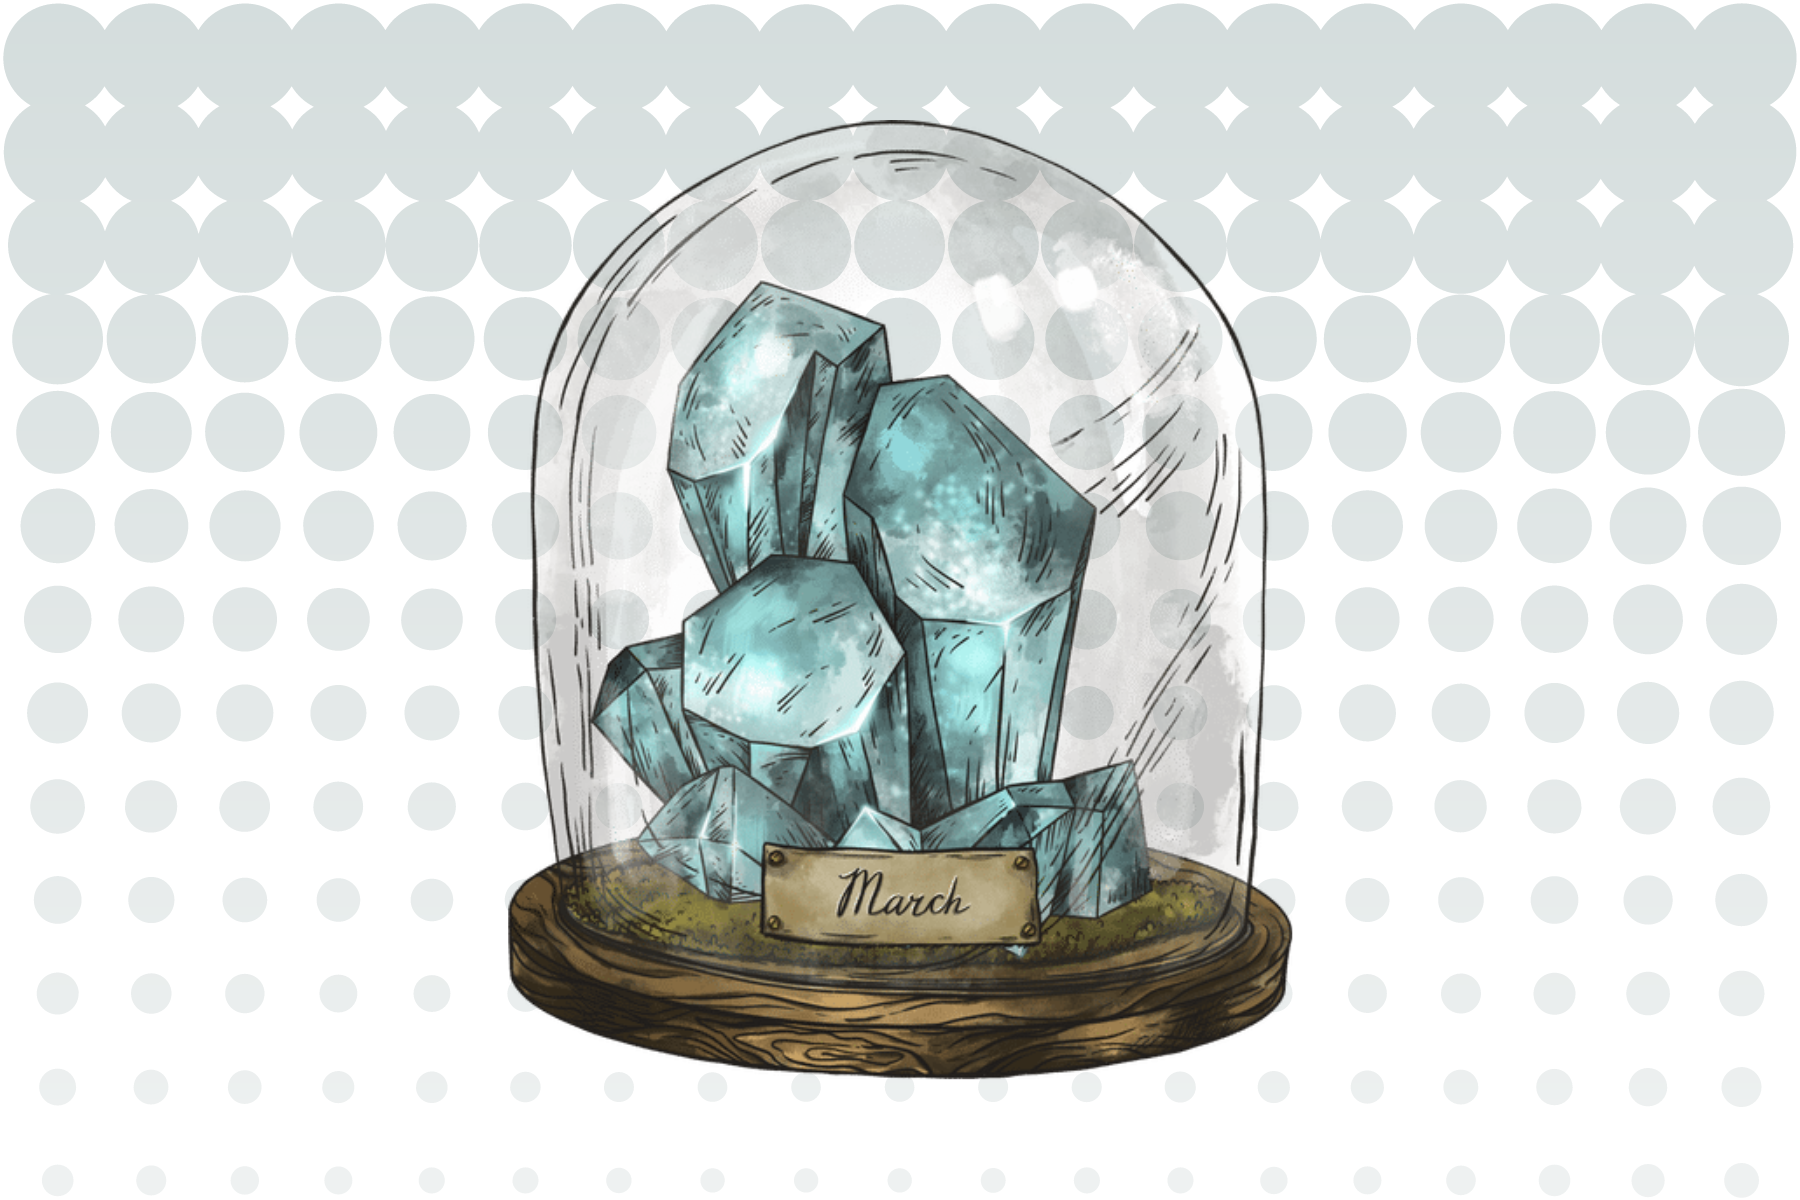 Aquamarine stone inside a glass jar